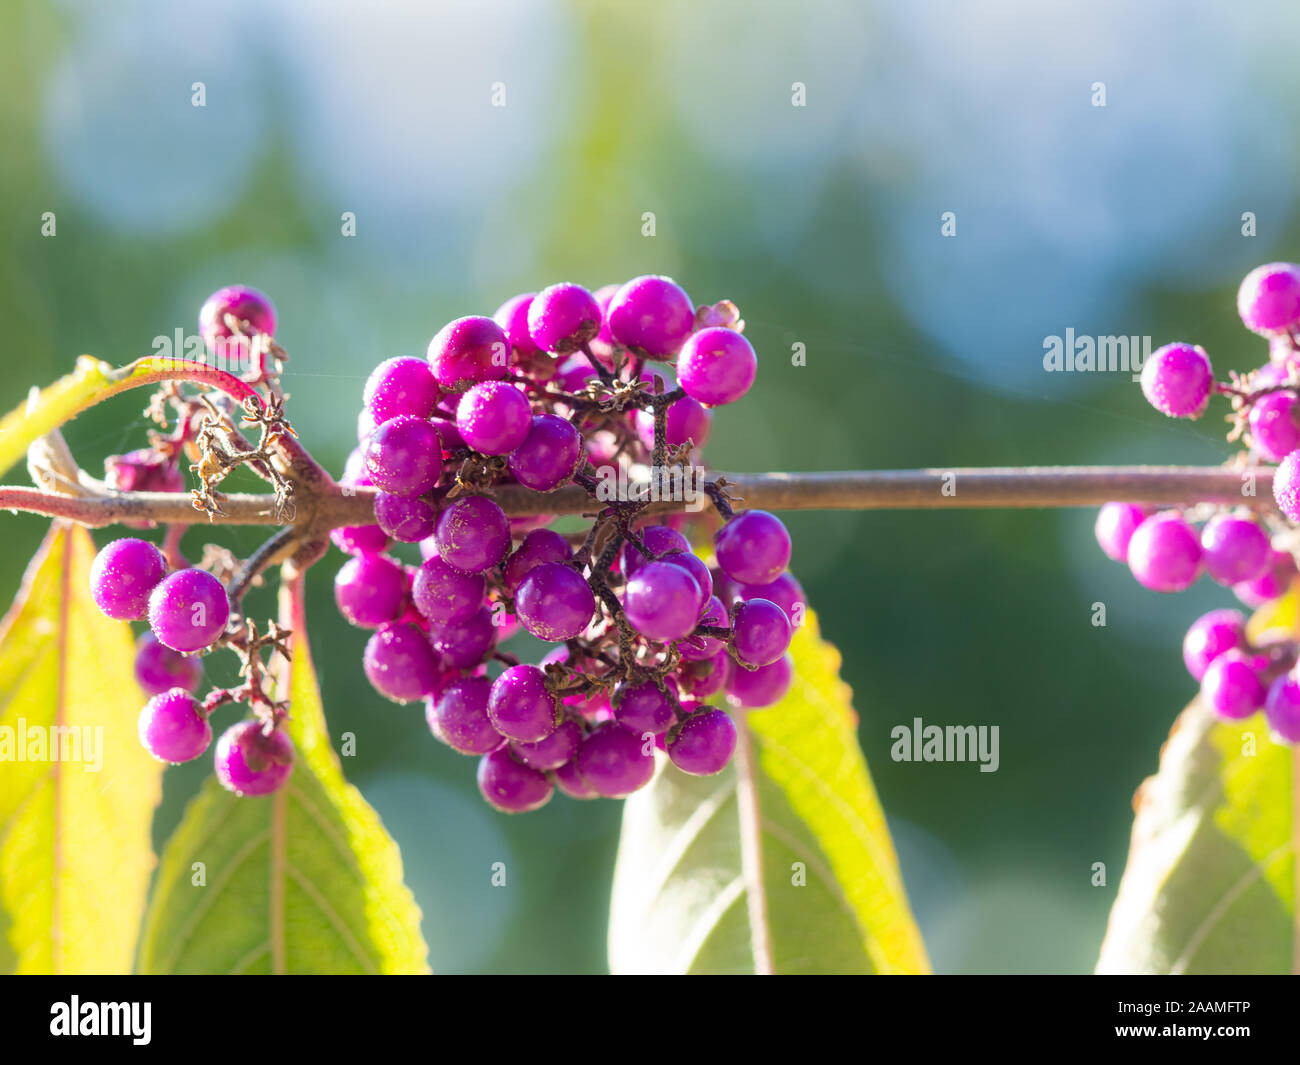 Closeup of purple berries and green leaves of a Callicarpa bodinieri bush in a garden Stock Photo